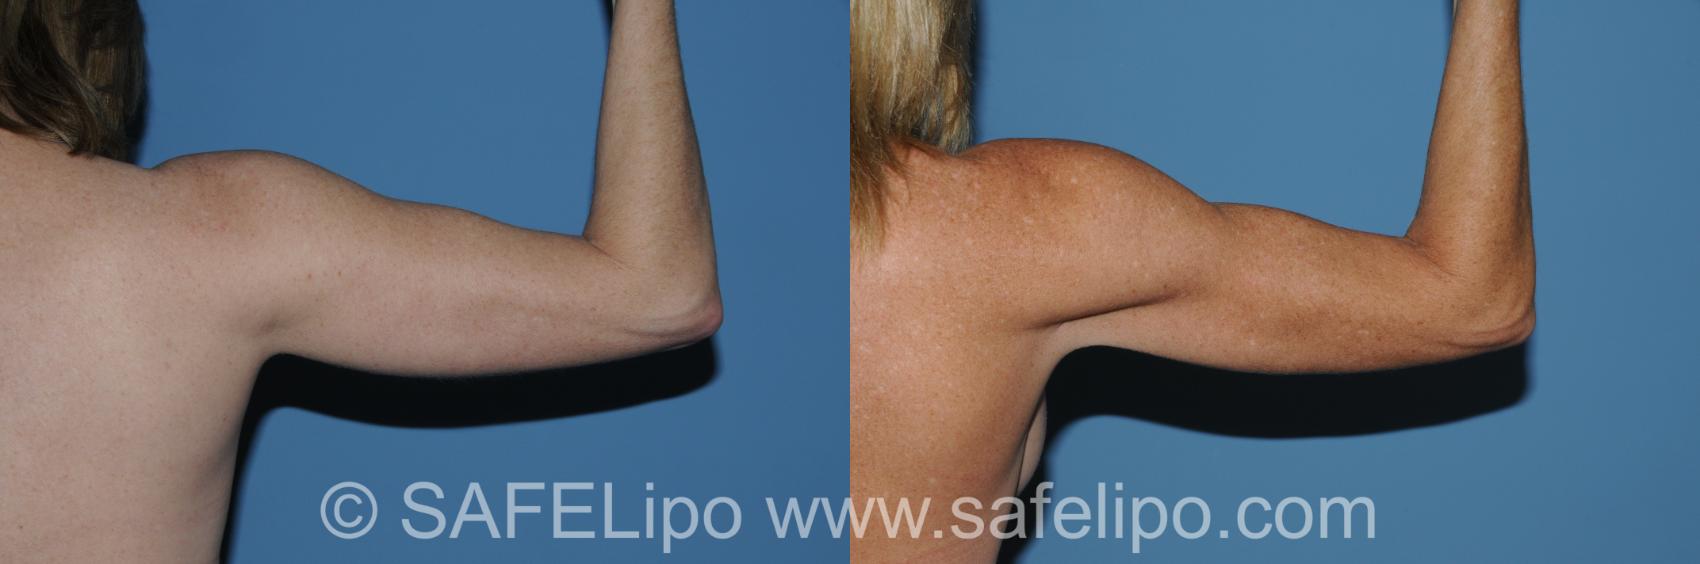 SAFELipo Back Right Flexed Photo, Shreveport, LA, The Wall Center for Plastic Surgery, Case 296